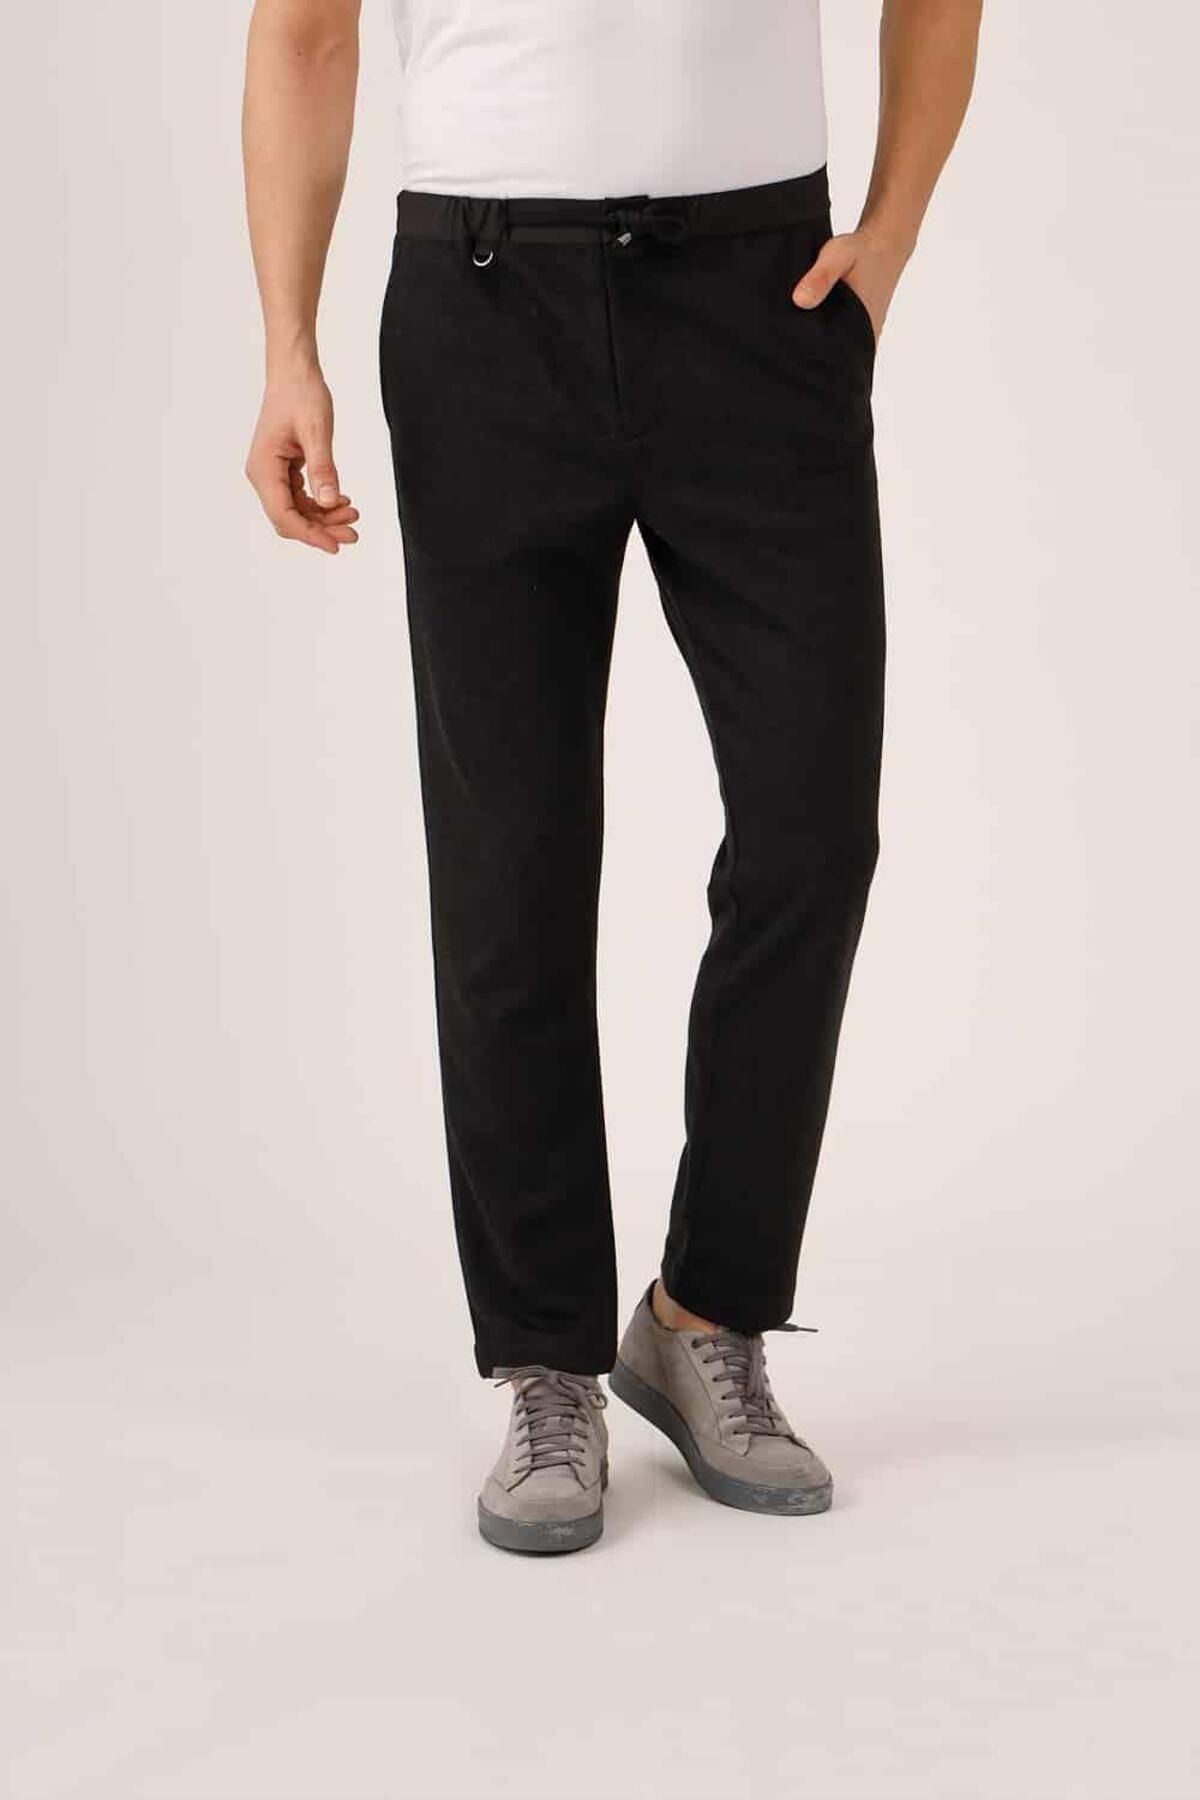 Dufy Siyah Erkek Slim Fit Düz Casual Pantolon - 91007